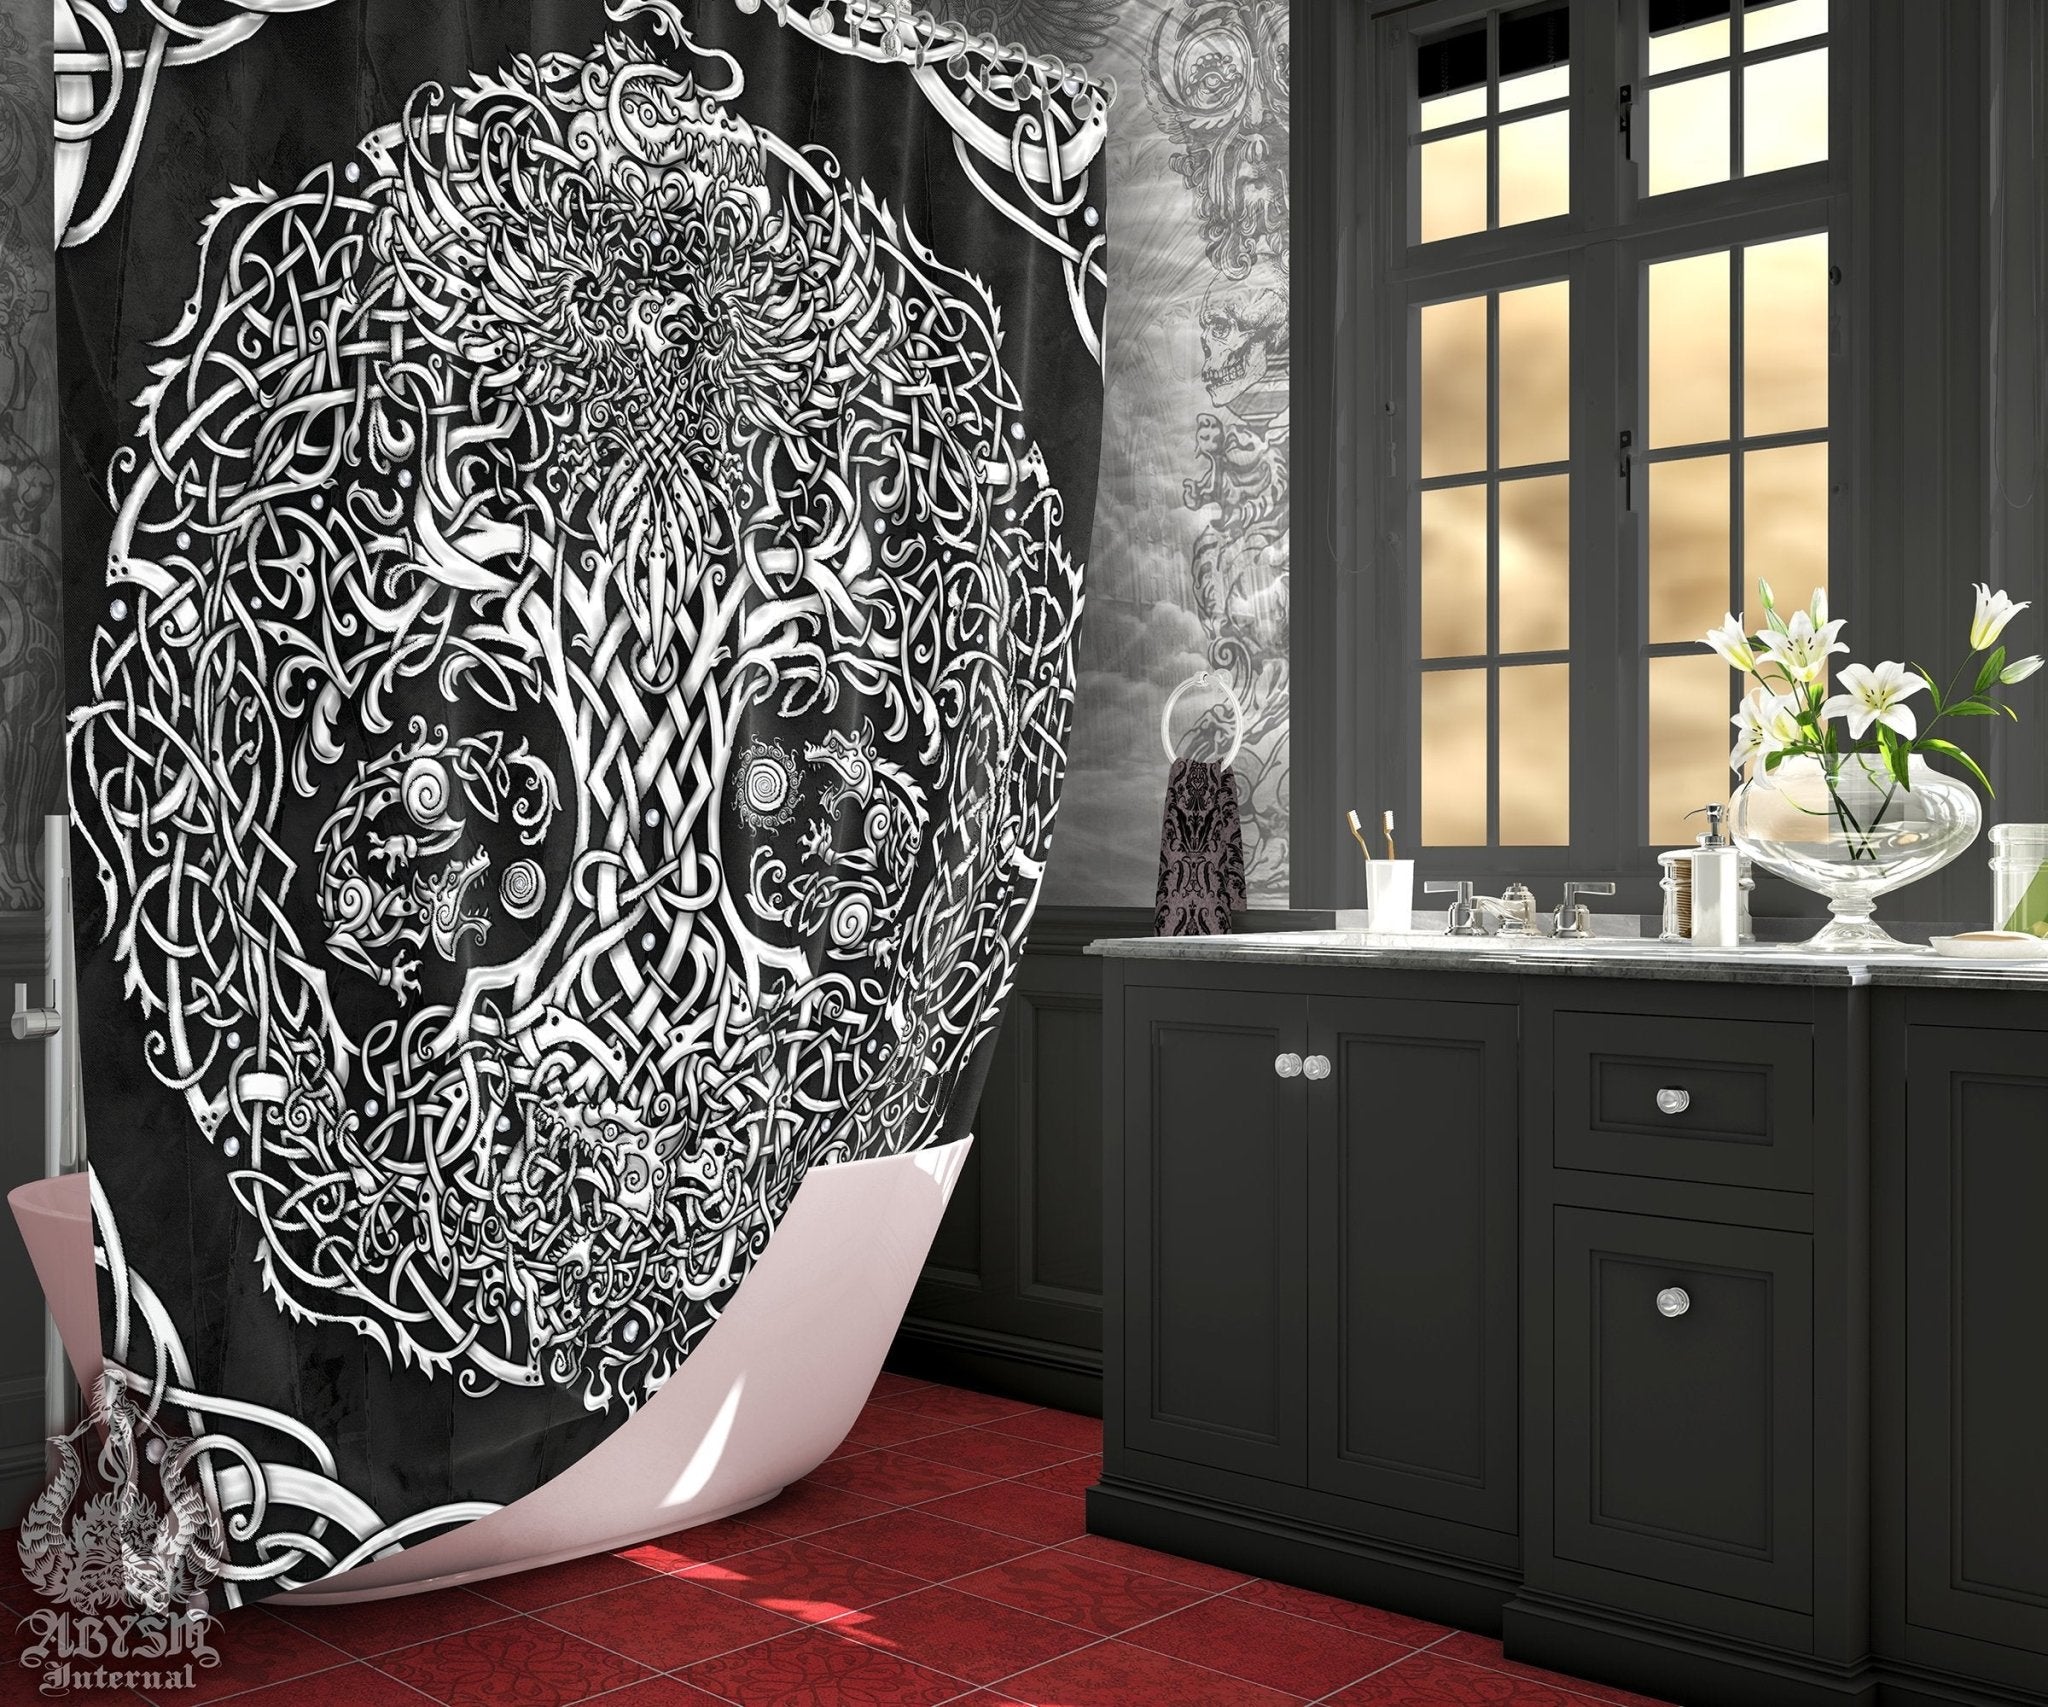 Viking Shower Curtain, Yggdrasil, Norse Bathroom Decor, Pagan, Tree of Life - White & Black - Abysm Internal